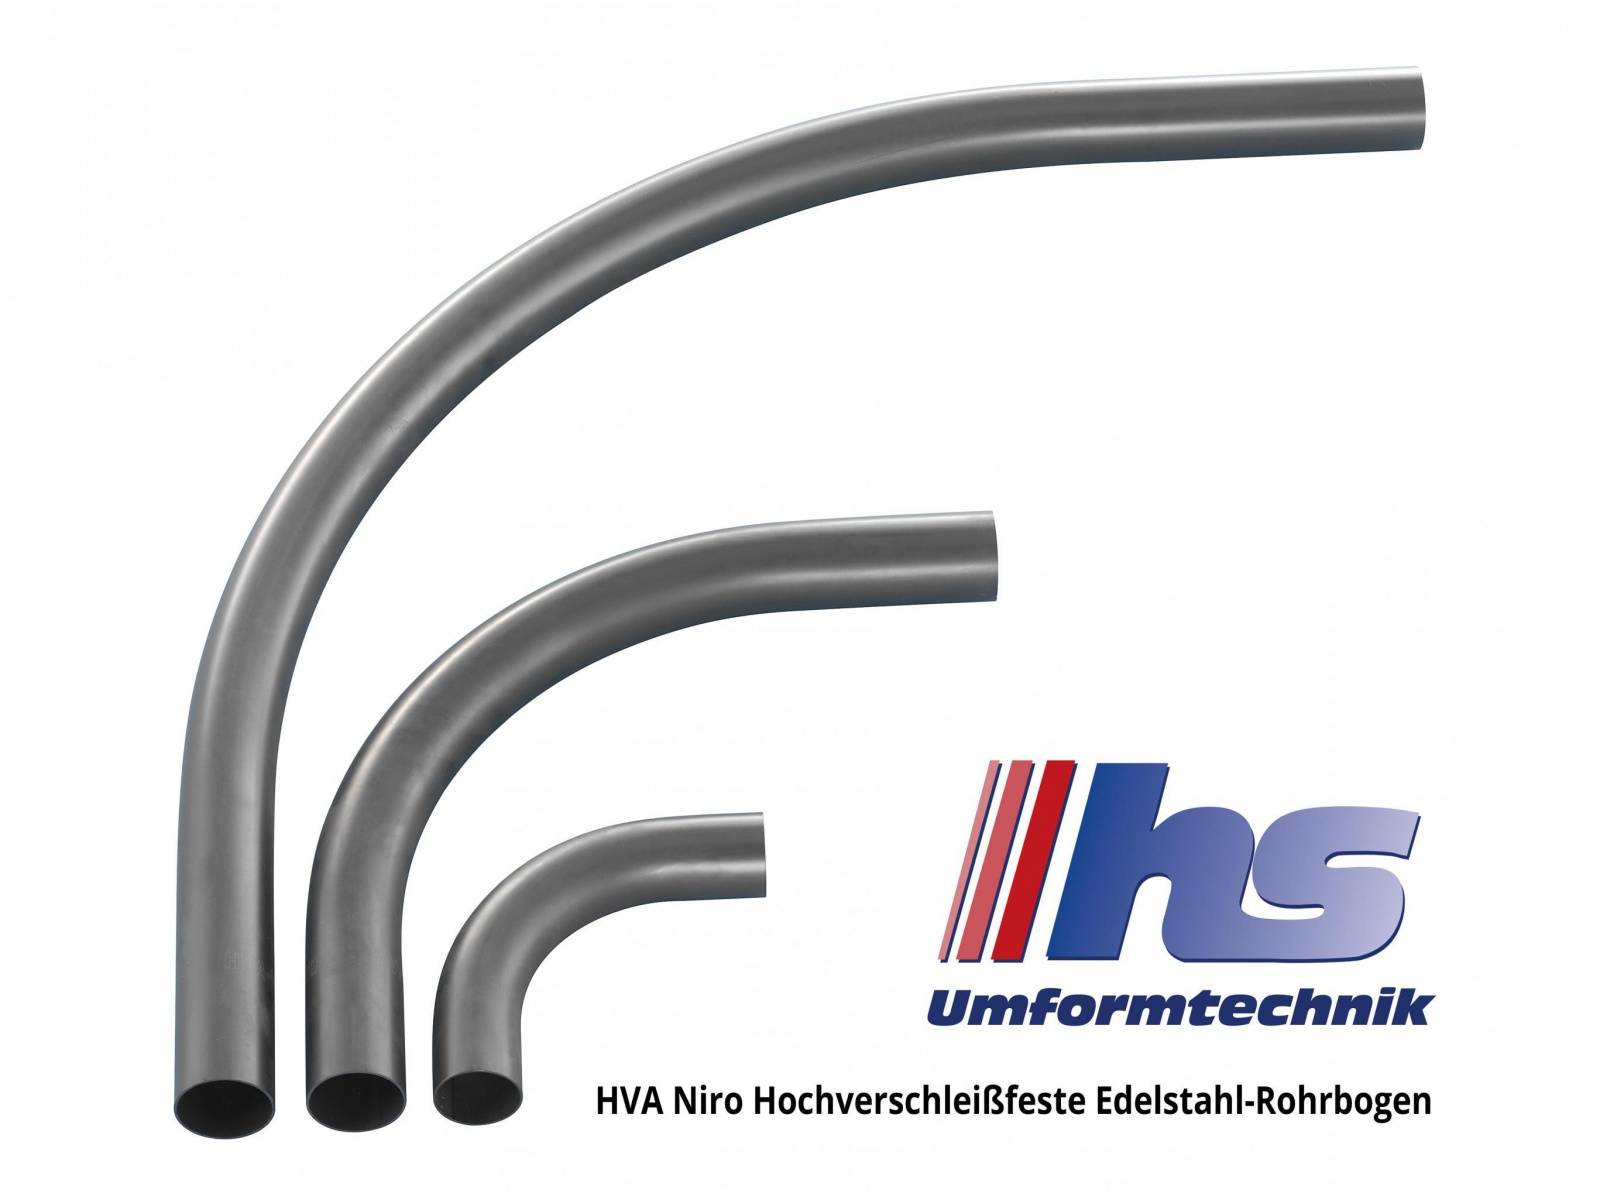 Hva niro highly wear-resistant pipe bends